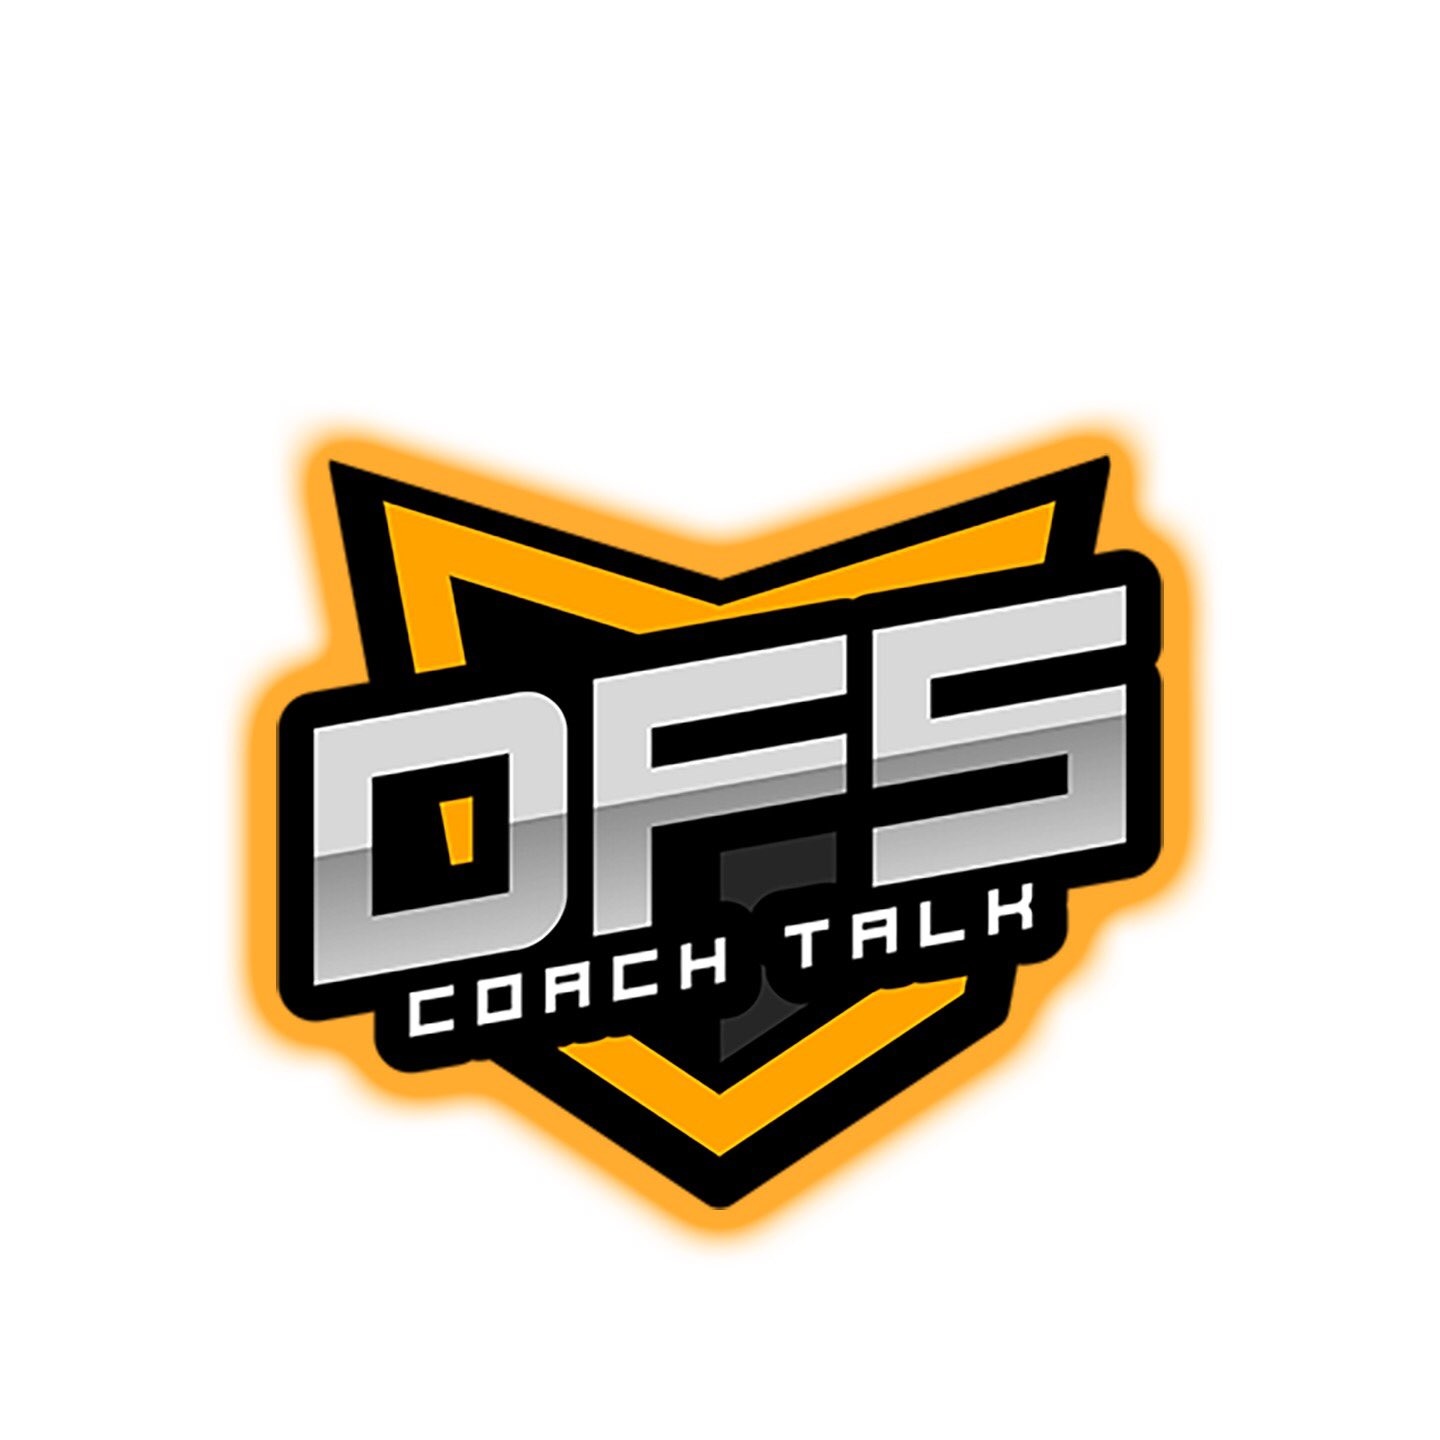 NFL Weekly DFS Strategy for Week 3!  - DraftKings / FanDuel - DFSCoachTalk.com. Lets go!